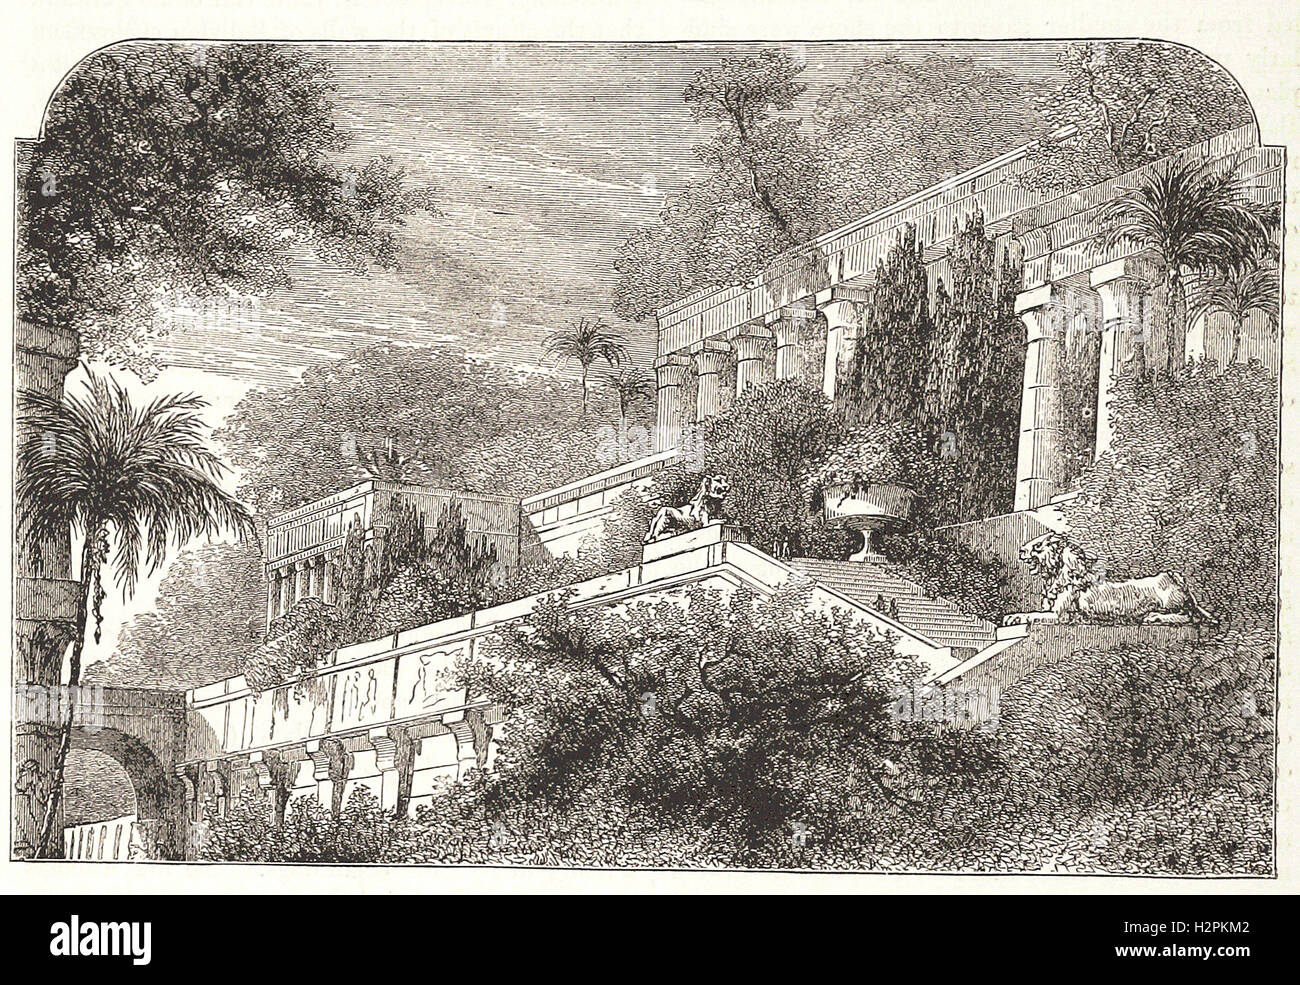 Los Jardines Colgantes de Babilonia antiguo - desde 'Cassell's ilustra la historia universal' - 1882 Foto de stock